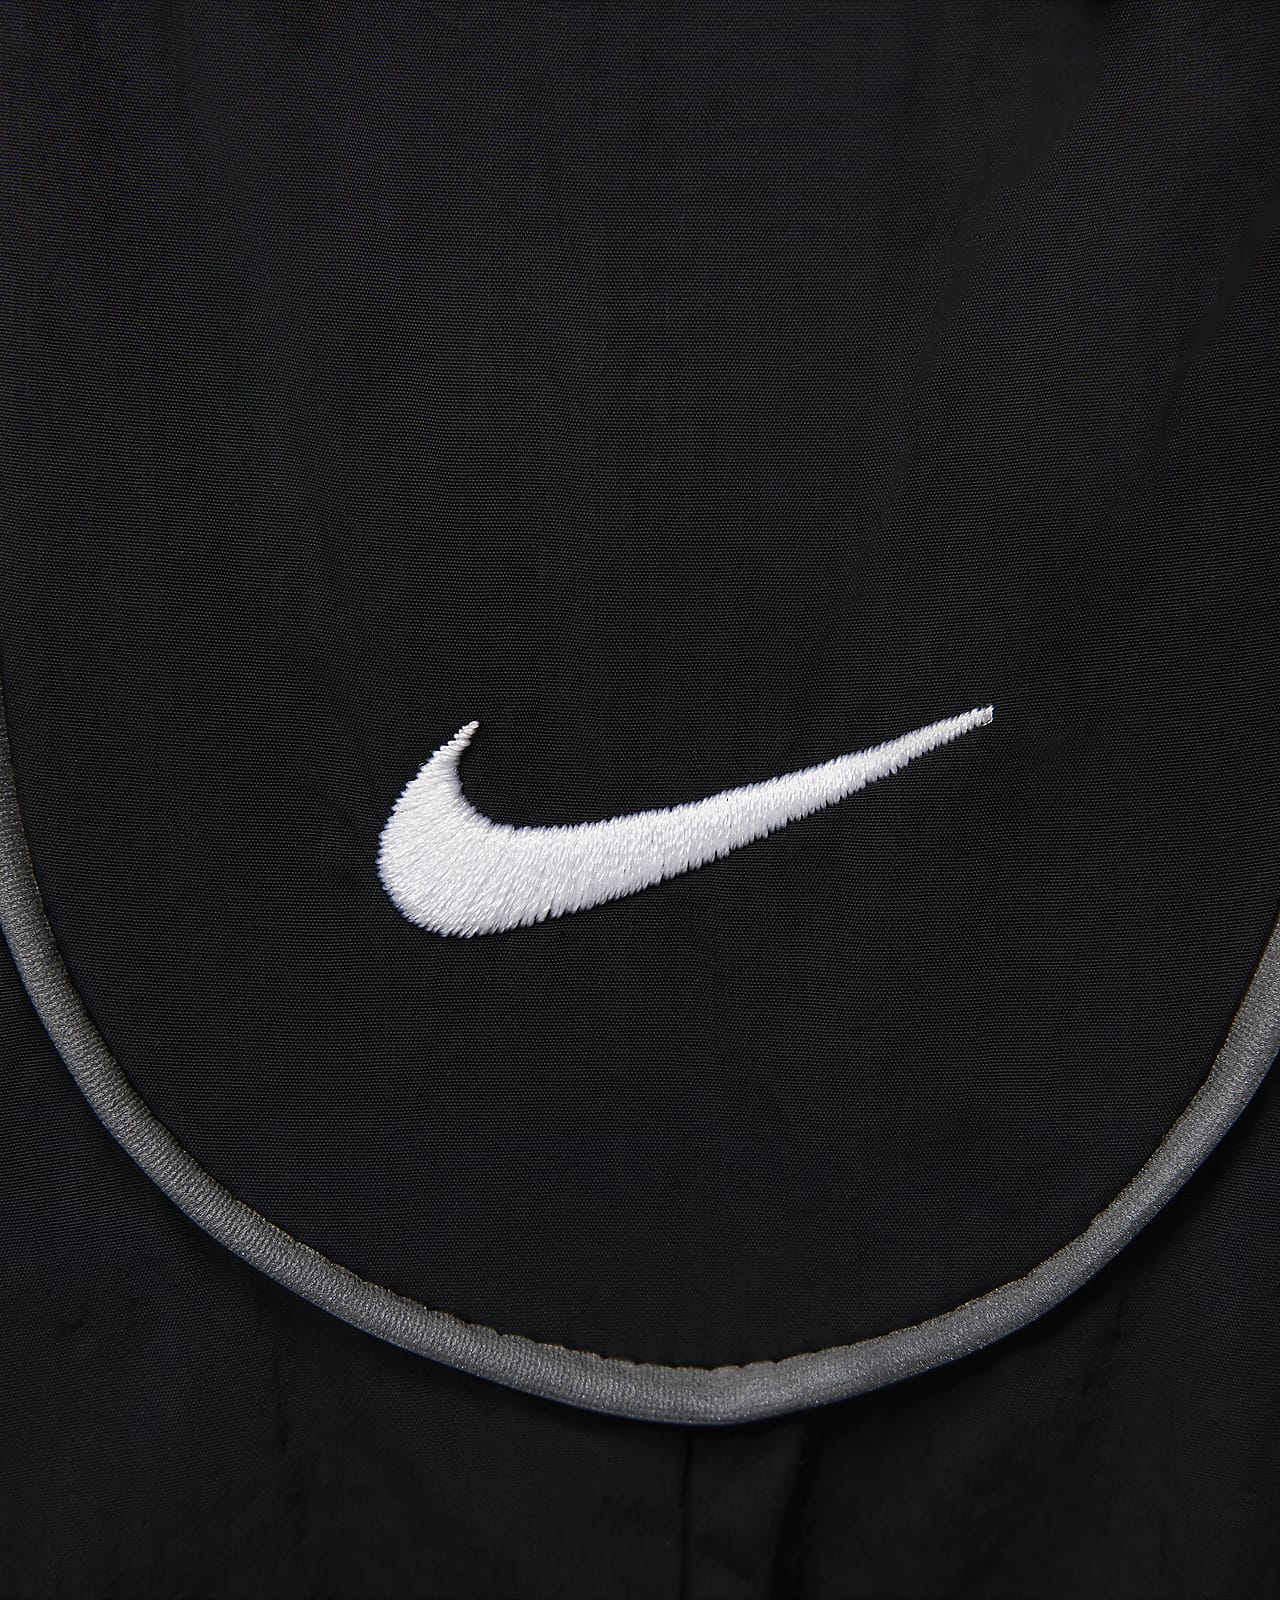 Nike Solo Swoosh Fleece Pants Black - BLACK/WHITE